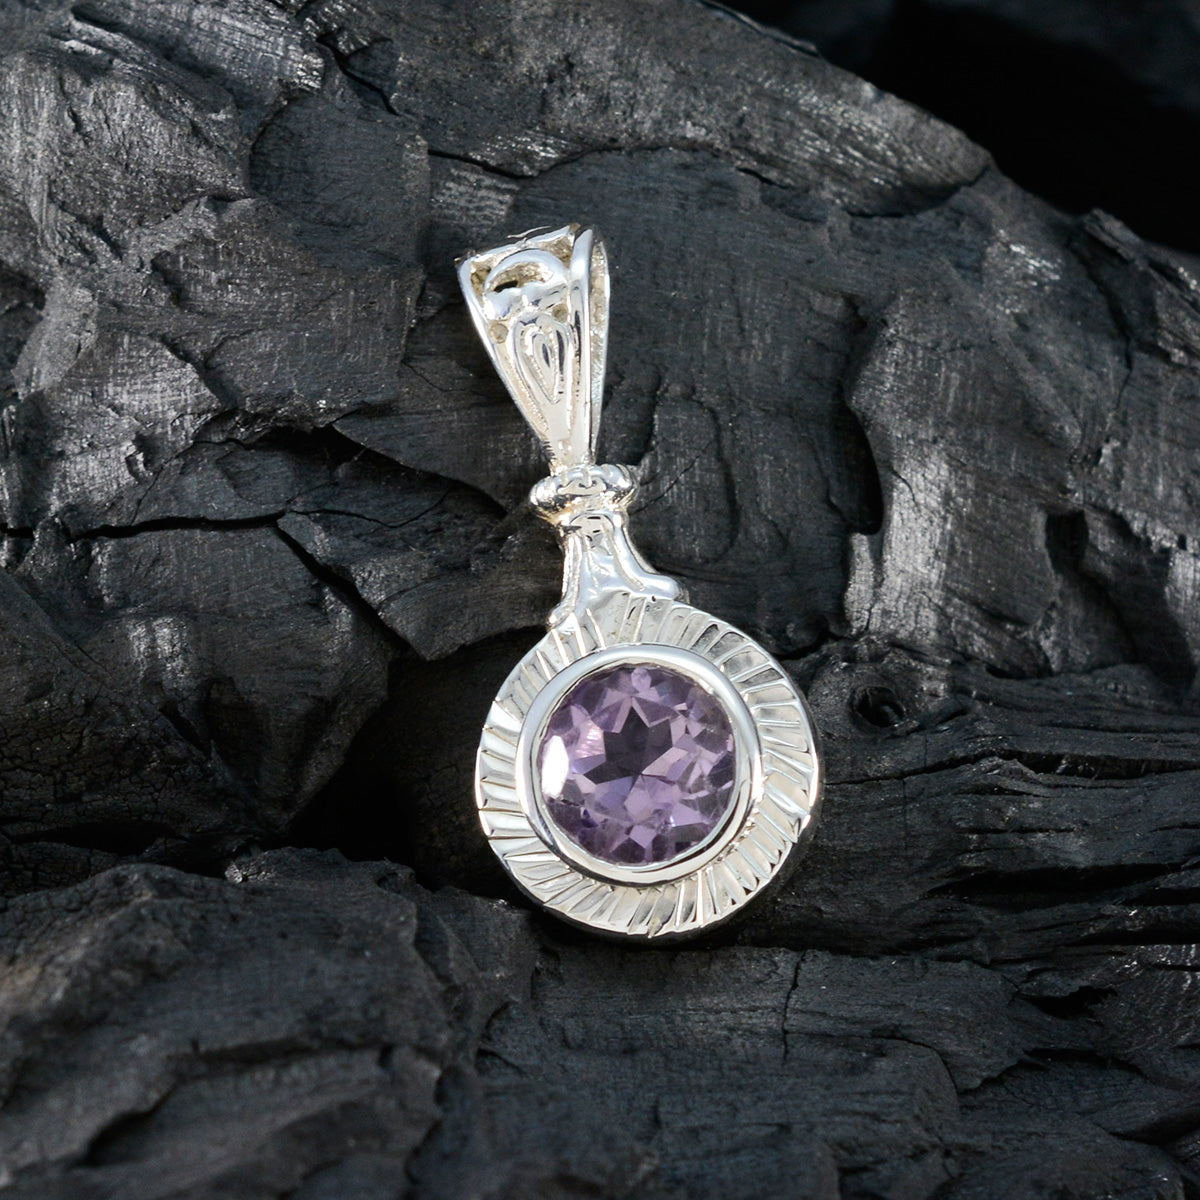 RIYO Smashing Gems круглый граненый фиолетовый аметист серебряный кулон подарок жене